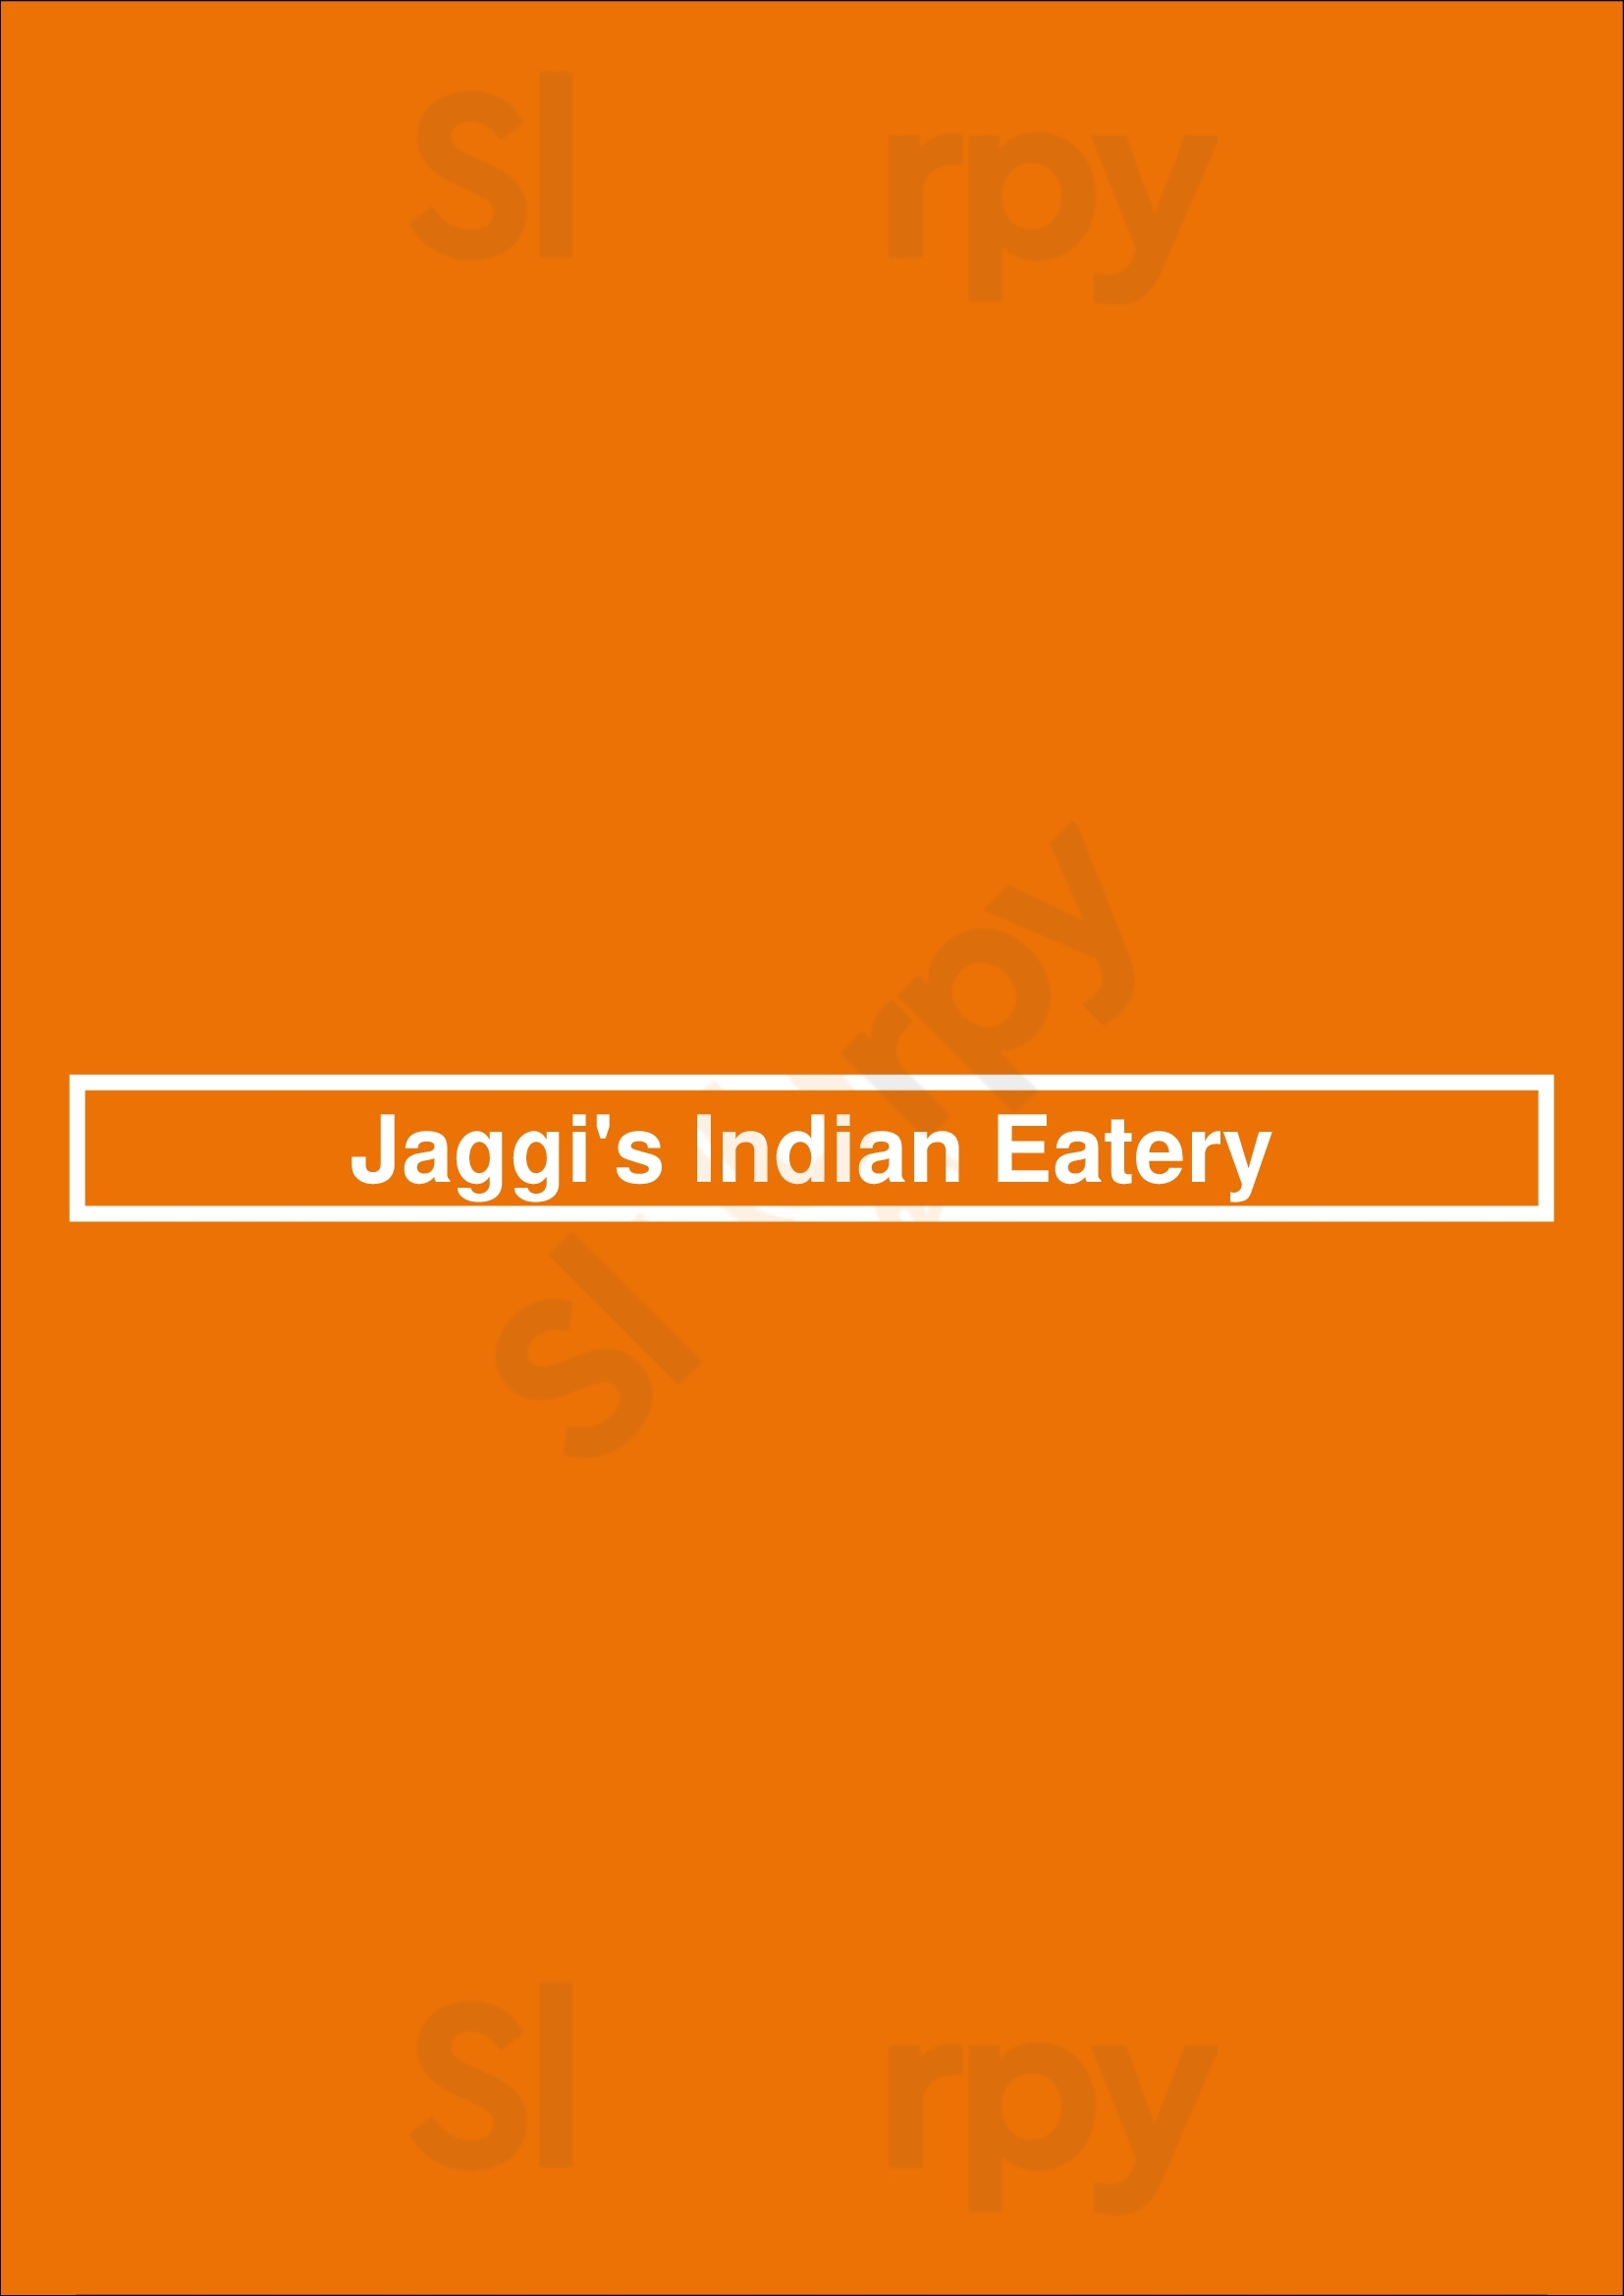 Jaggi's Indian Eatery Seven Hills Menu - 1